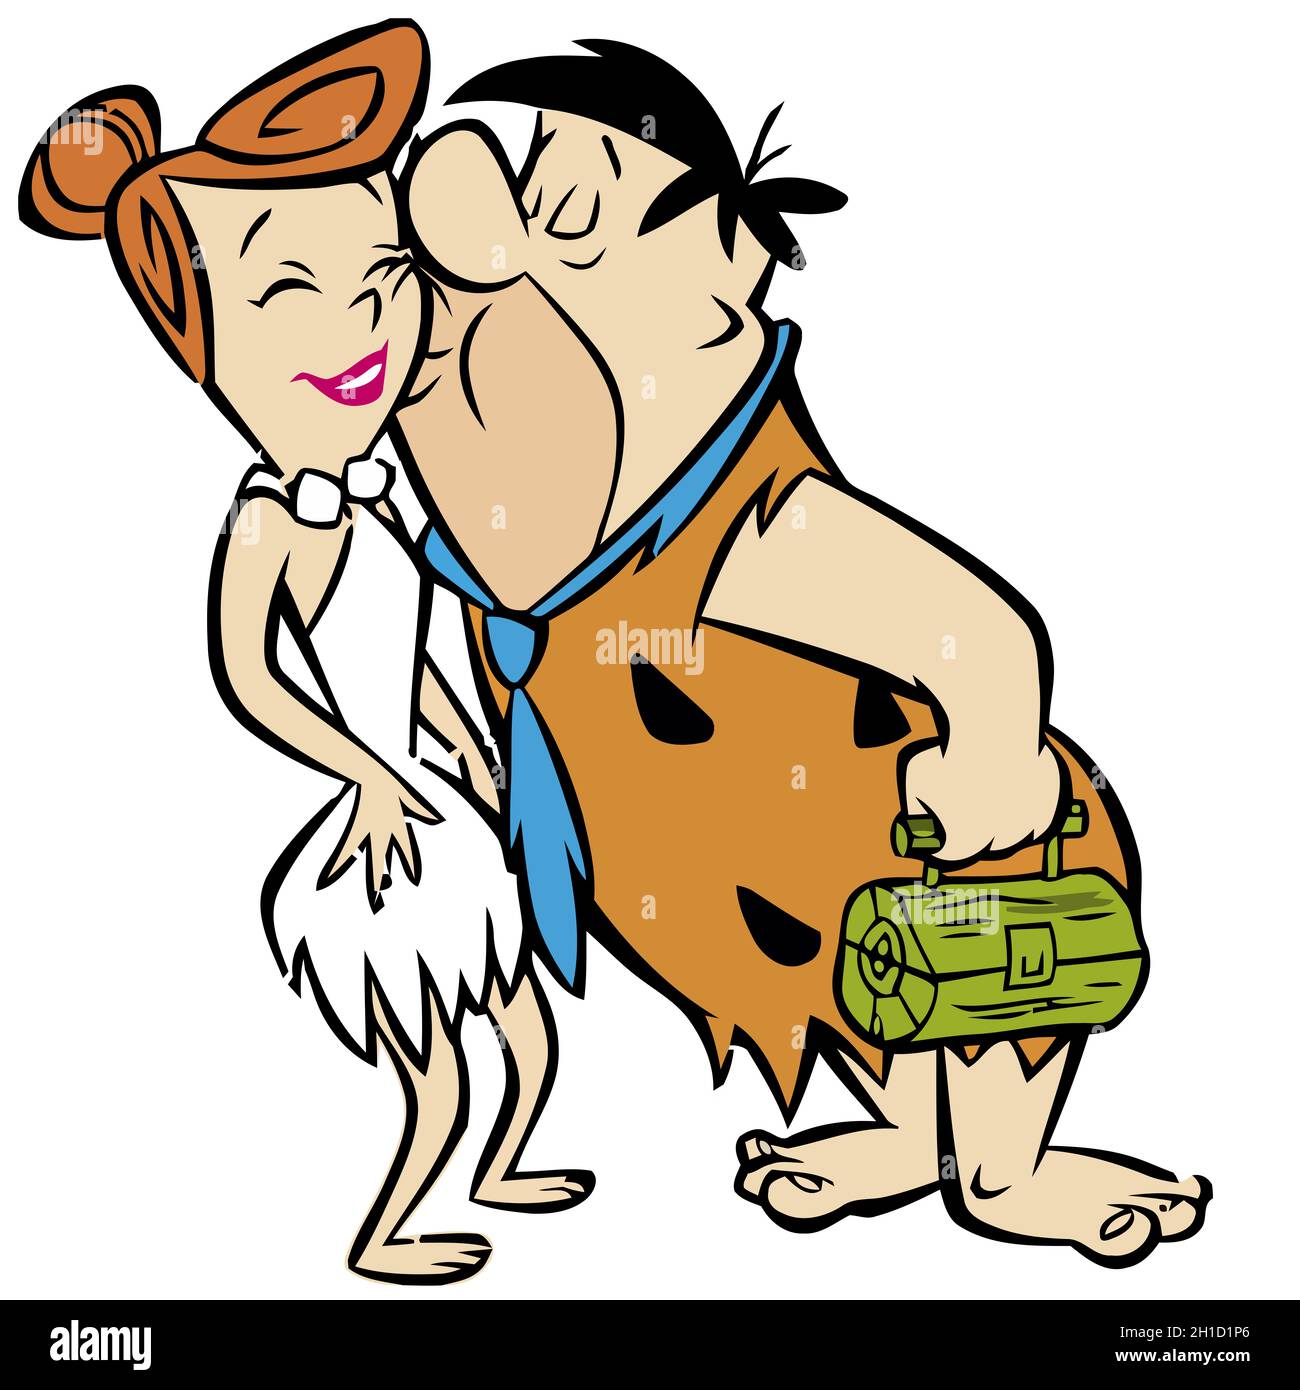 Fred and wilma couple kiss Flintstones romantic illustration editorial Stock Photo